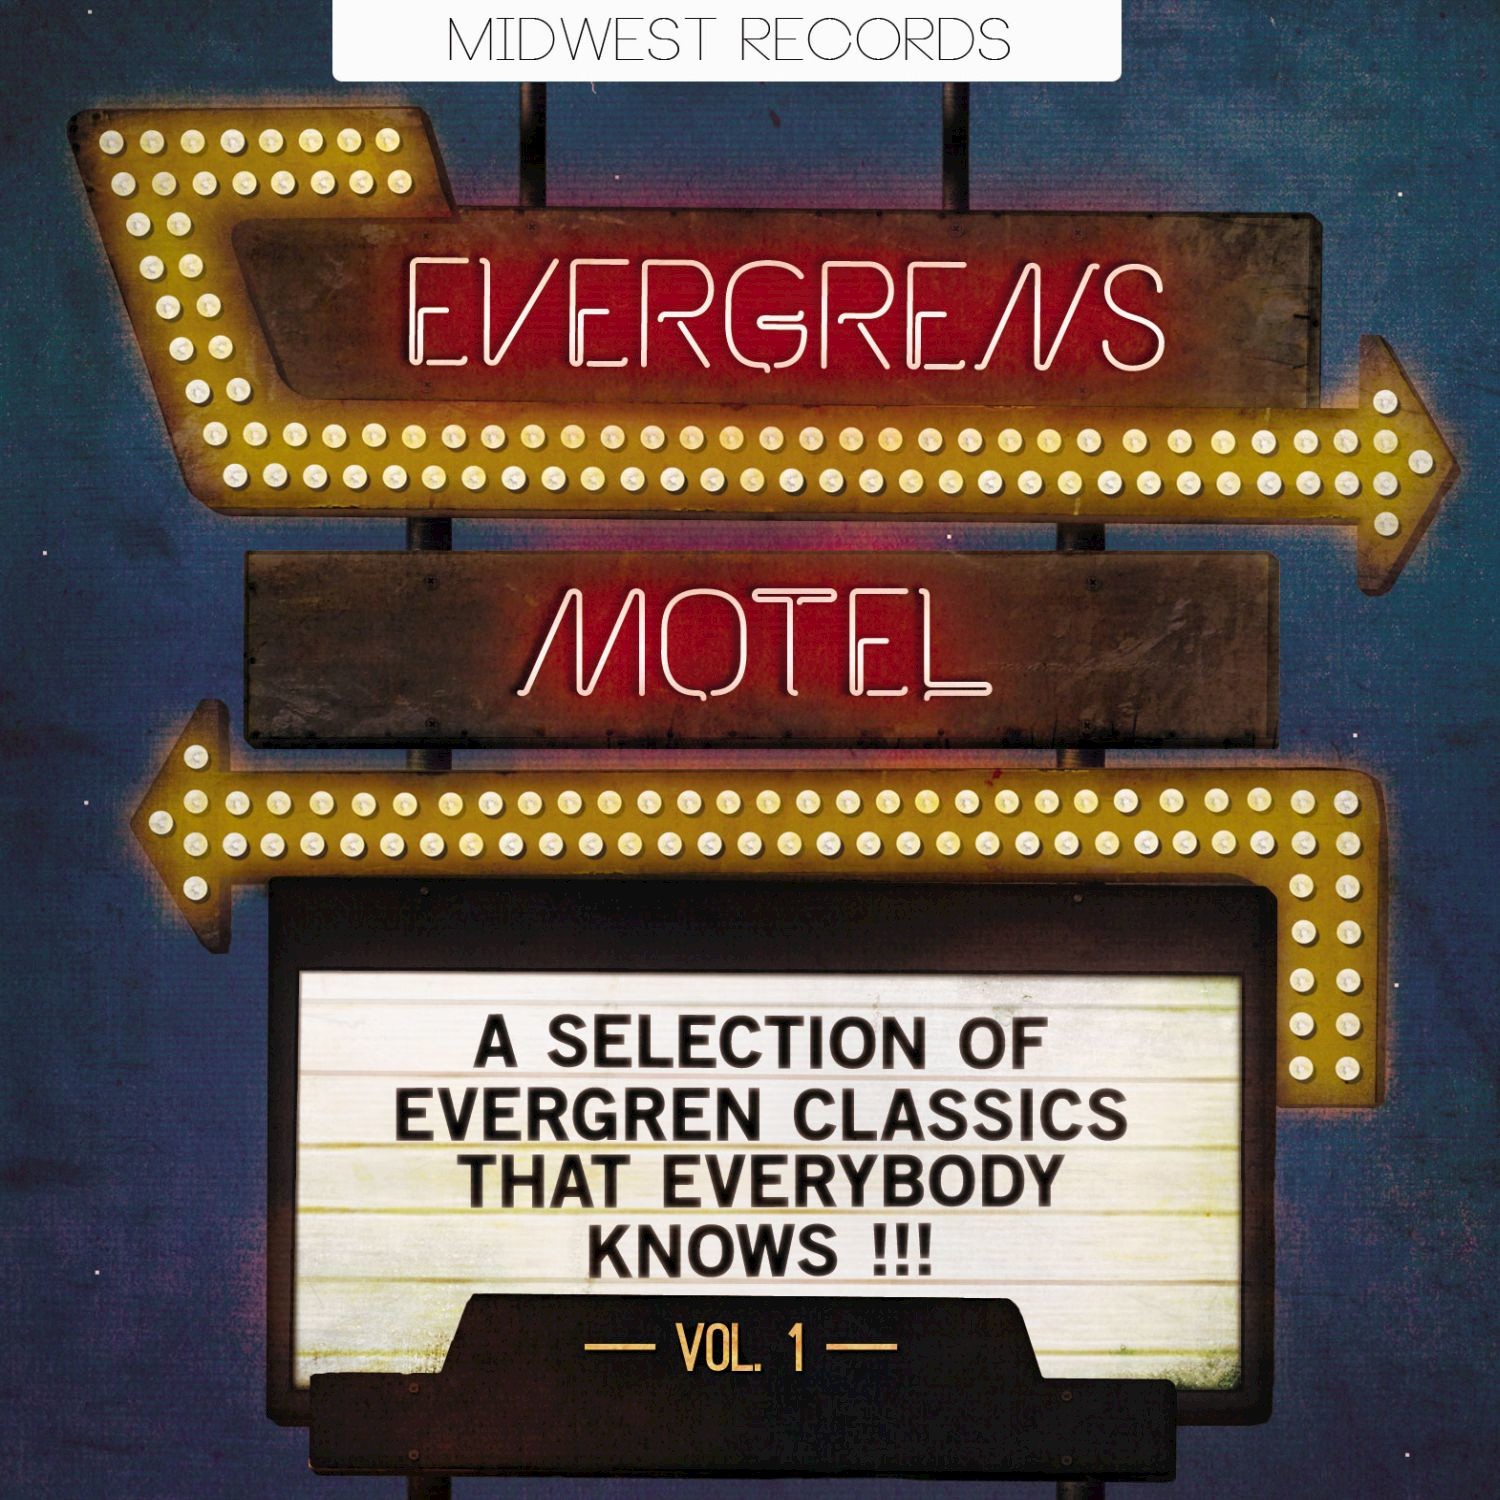 Evergreens Motel